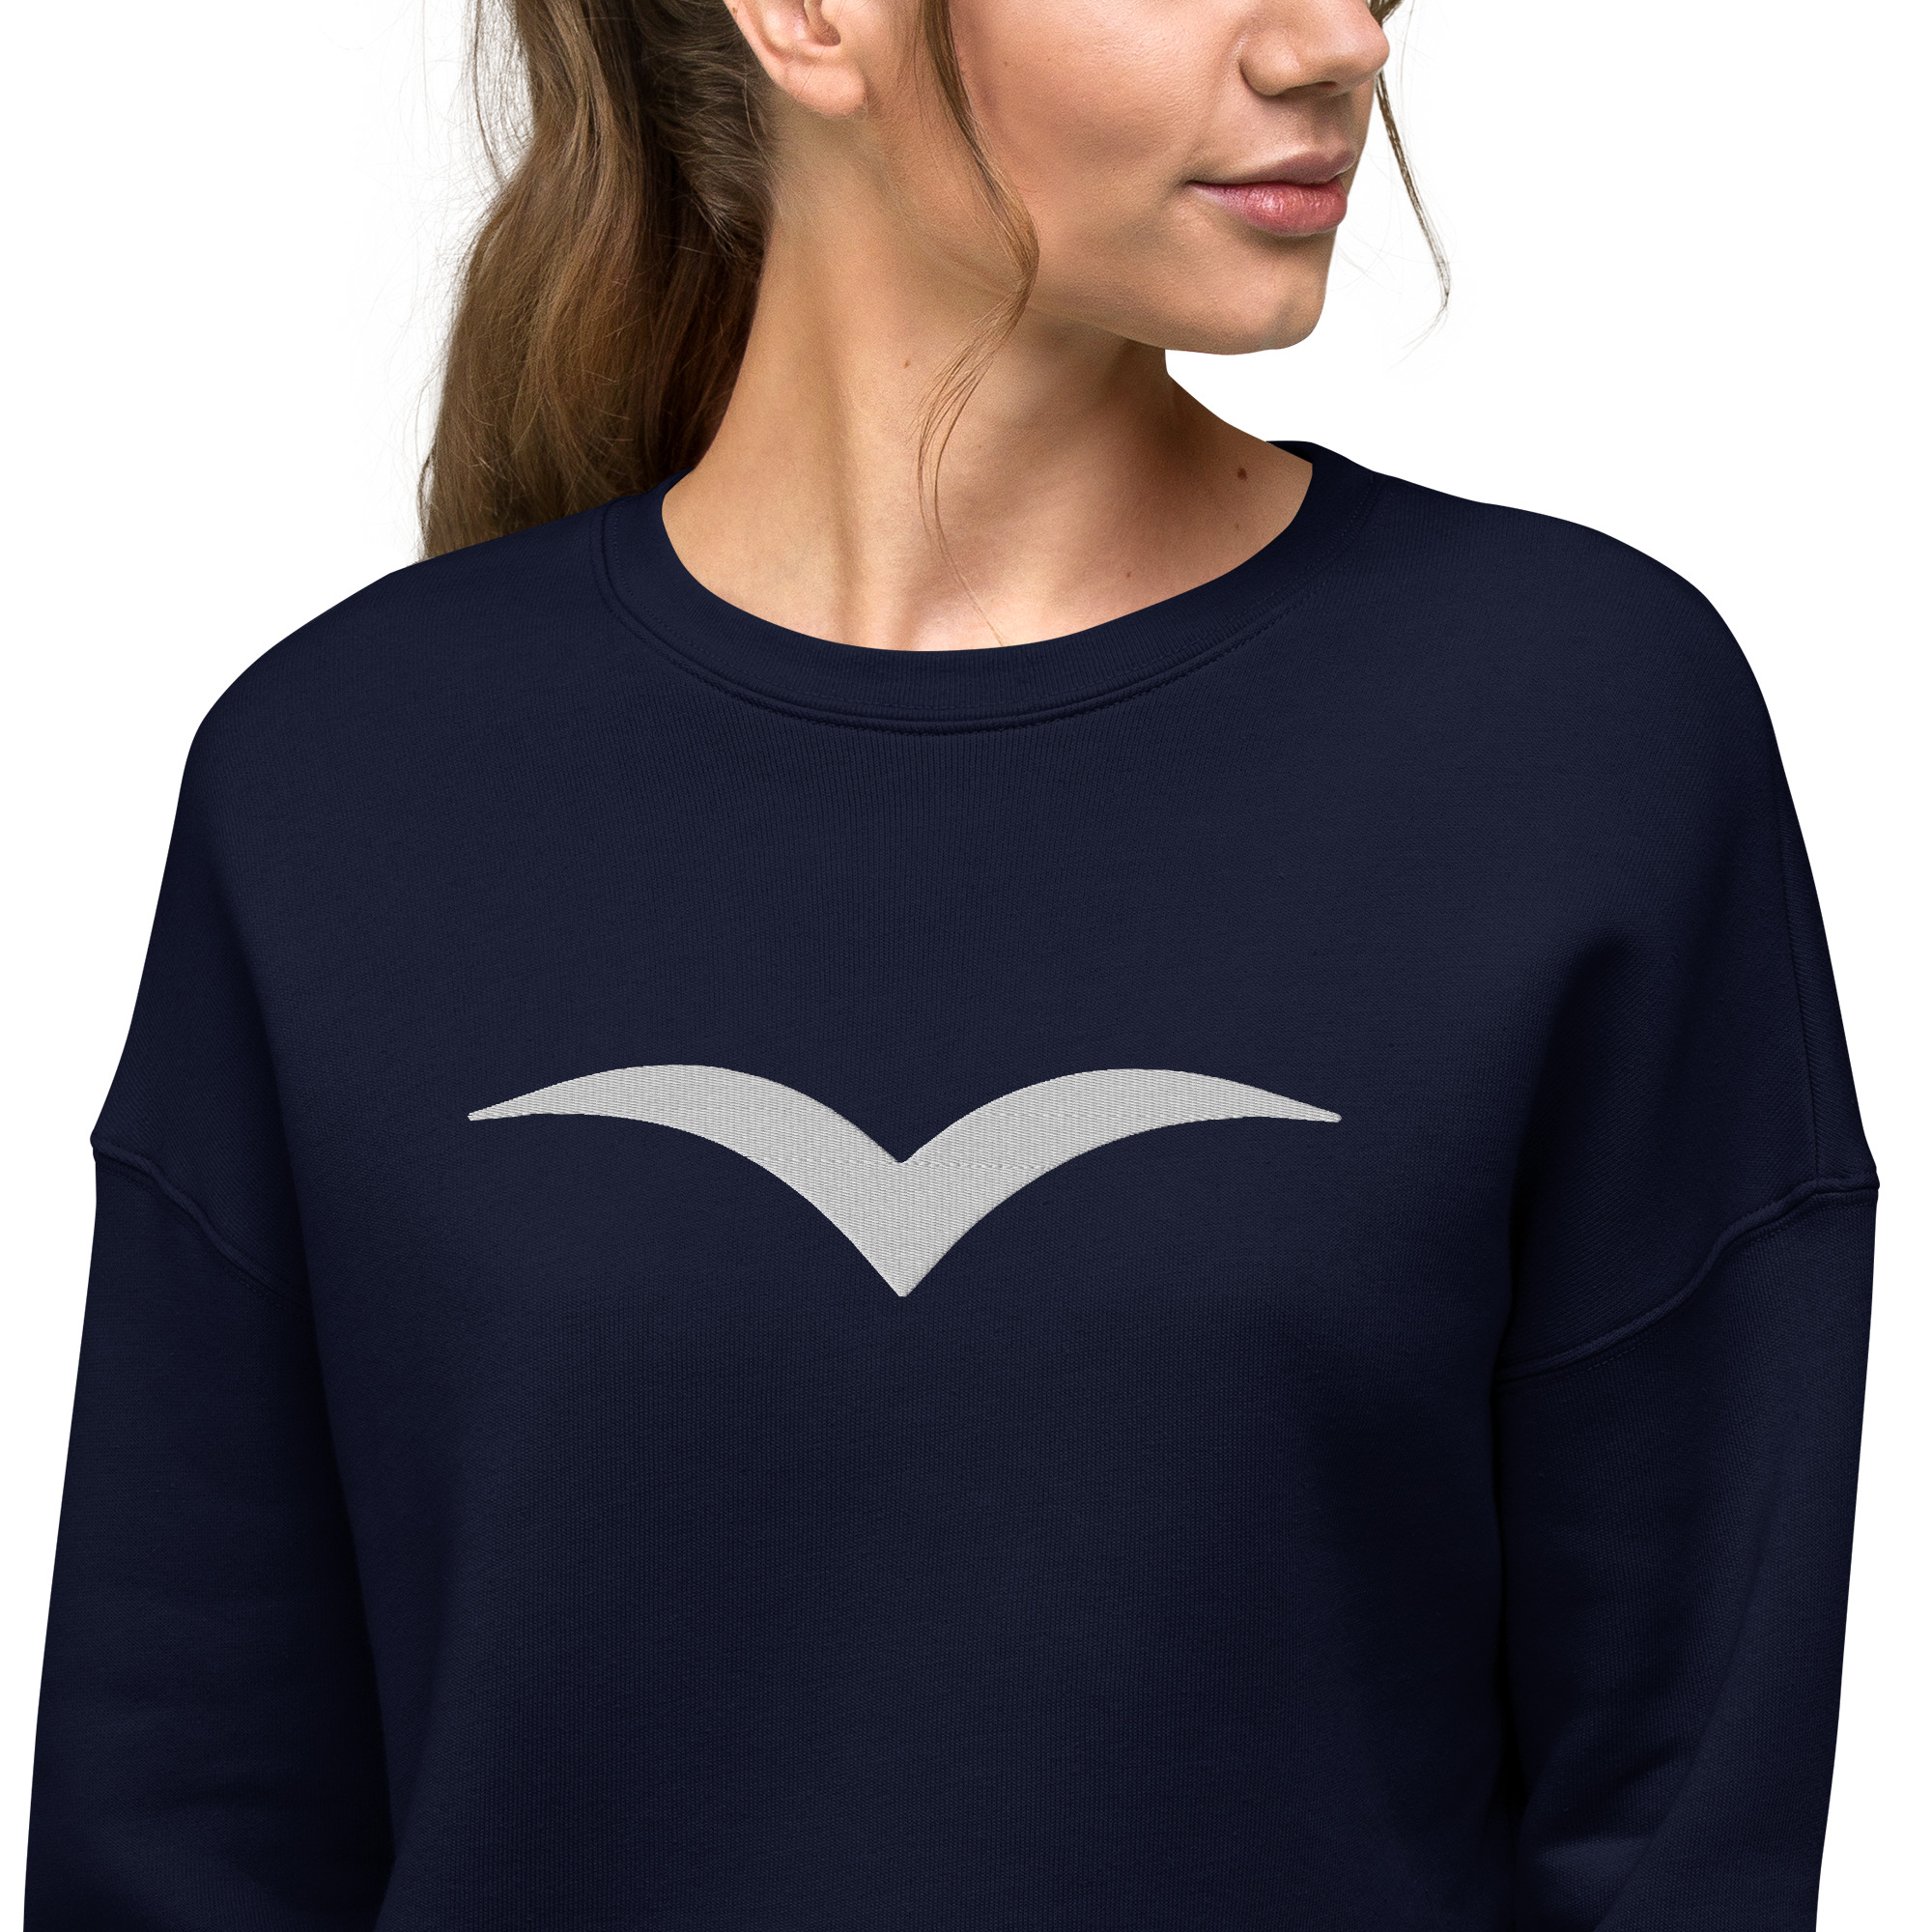 womens-cropped-sweatshirt-navy-zoomed-in-63e3e3f4141e9.jpg